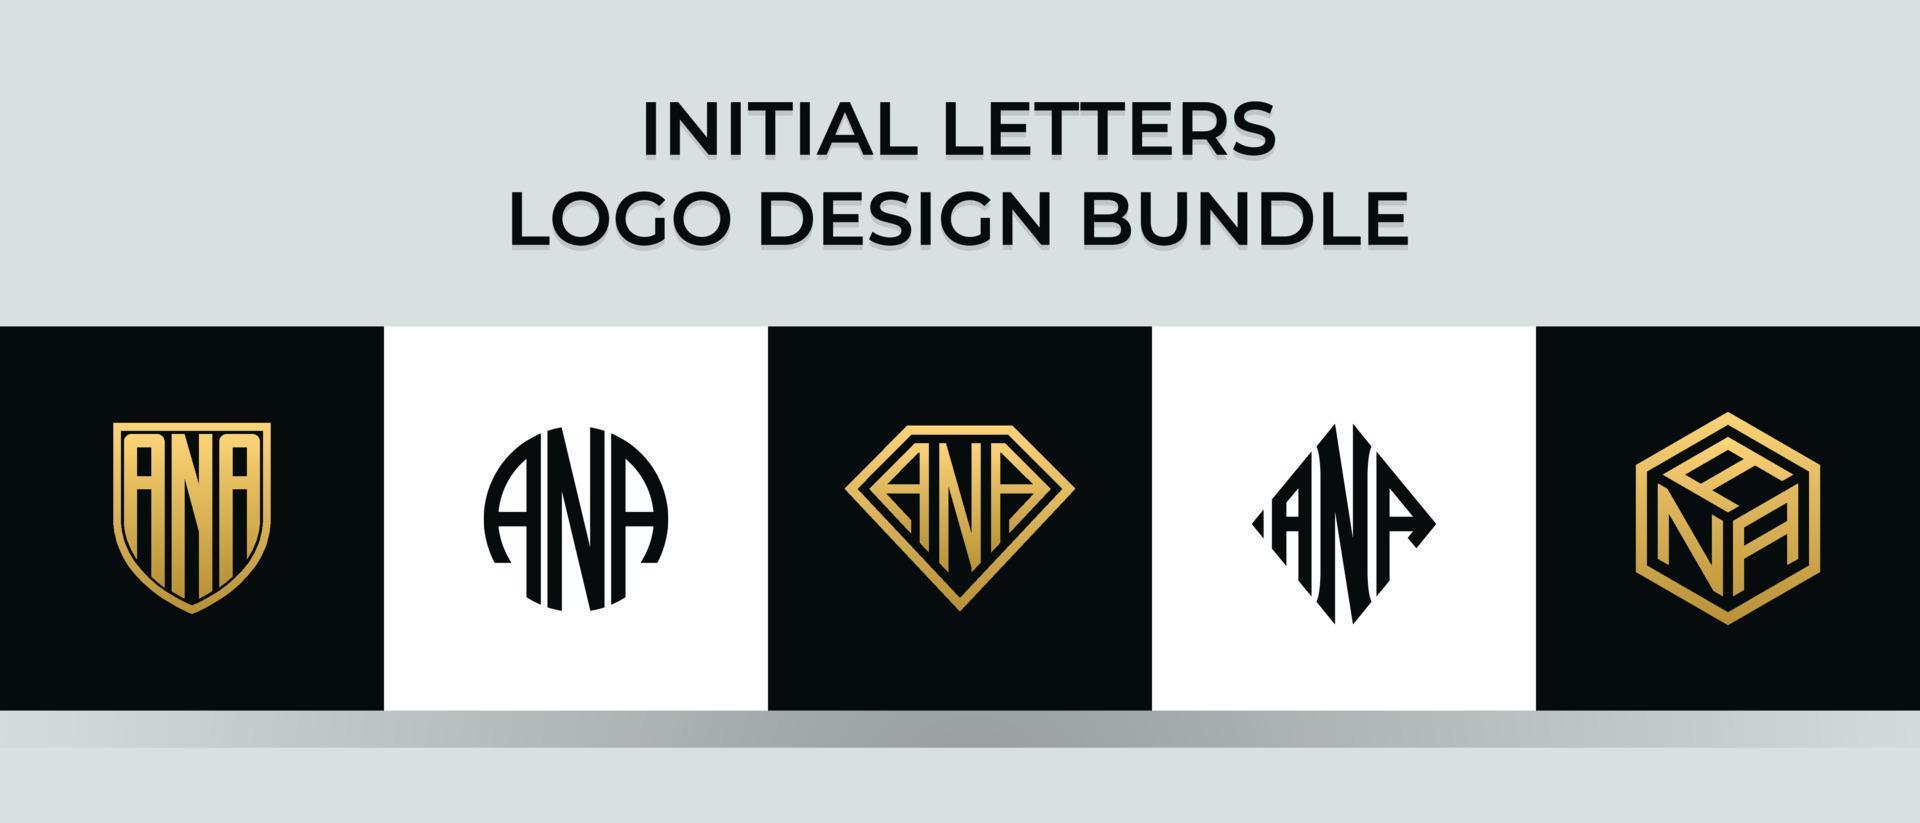 Initial Letters Ana Logo Designs Bundle Vector Art At Vecteezy